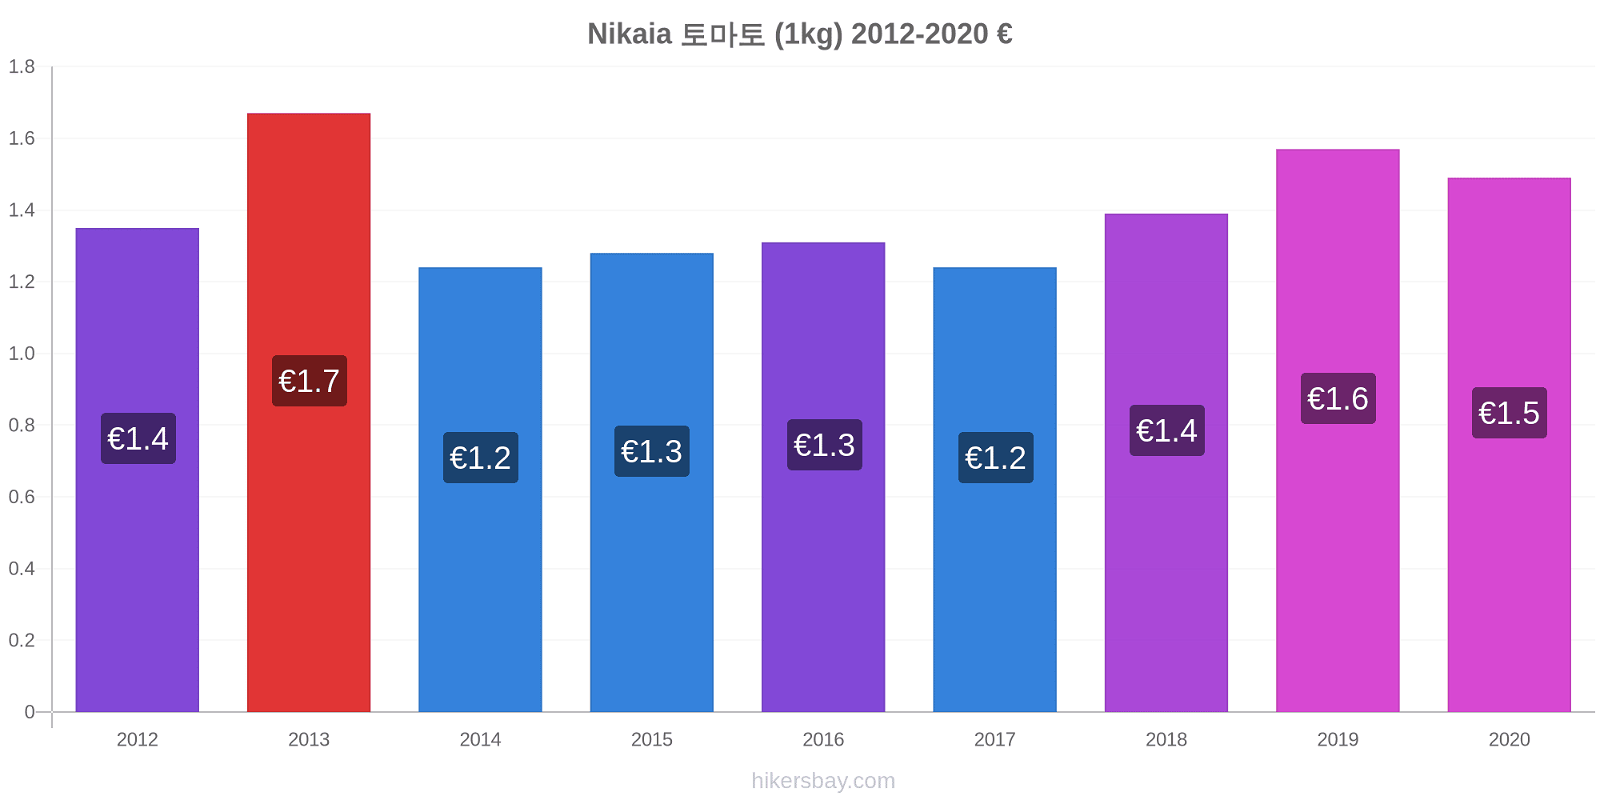 Nikaia 가격 변경 토마토 (1kg) hikersbay.com